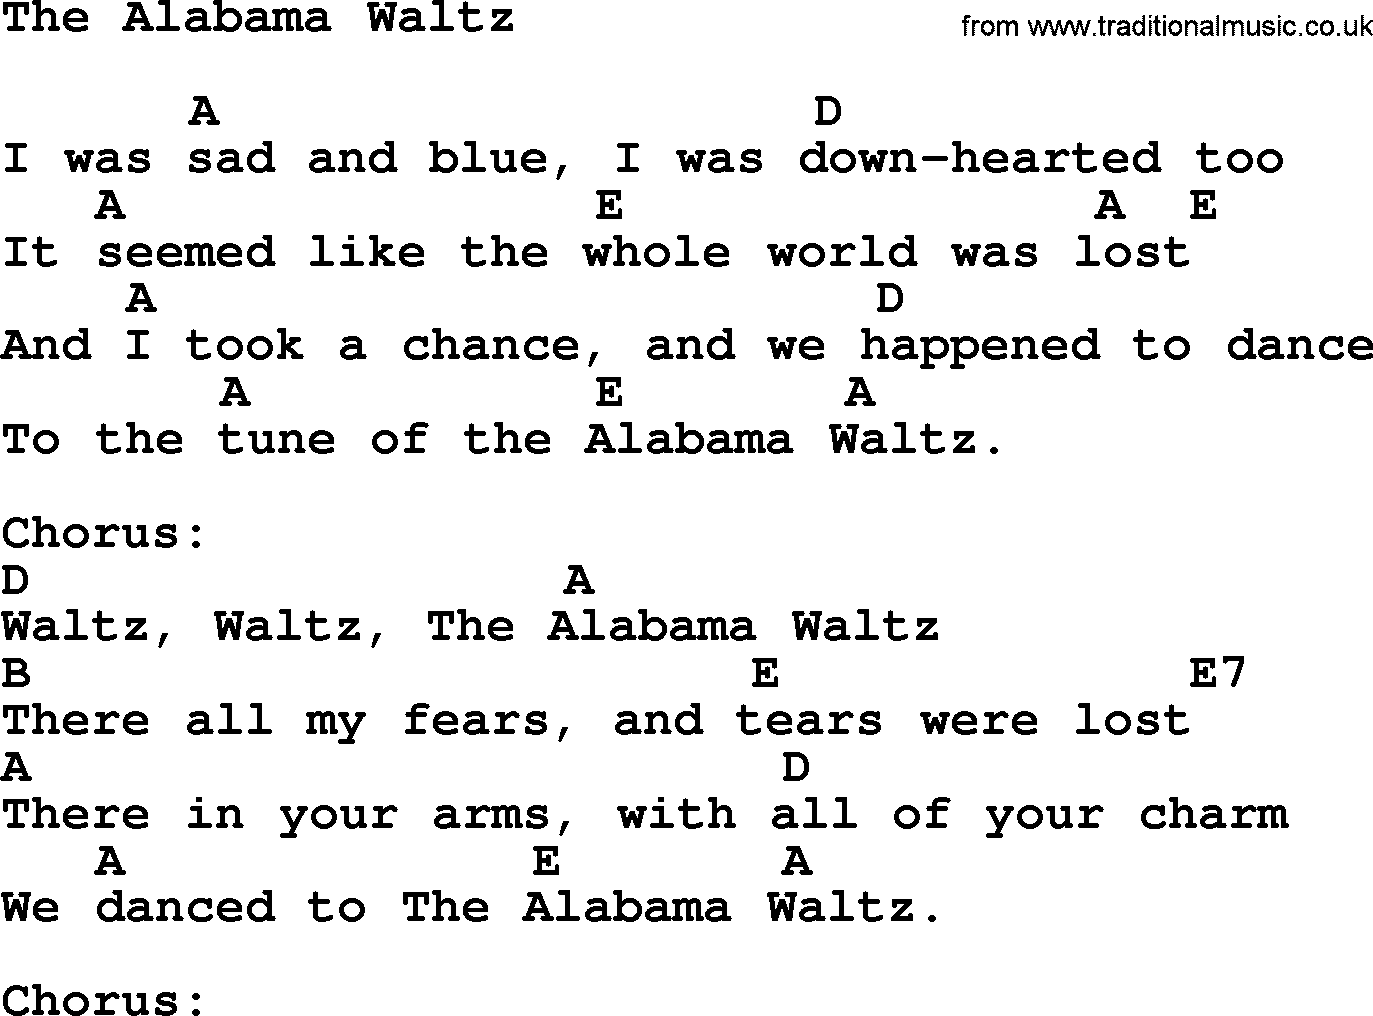 Hank Williams song The Alabama Waltz, lyrics and chords